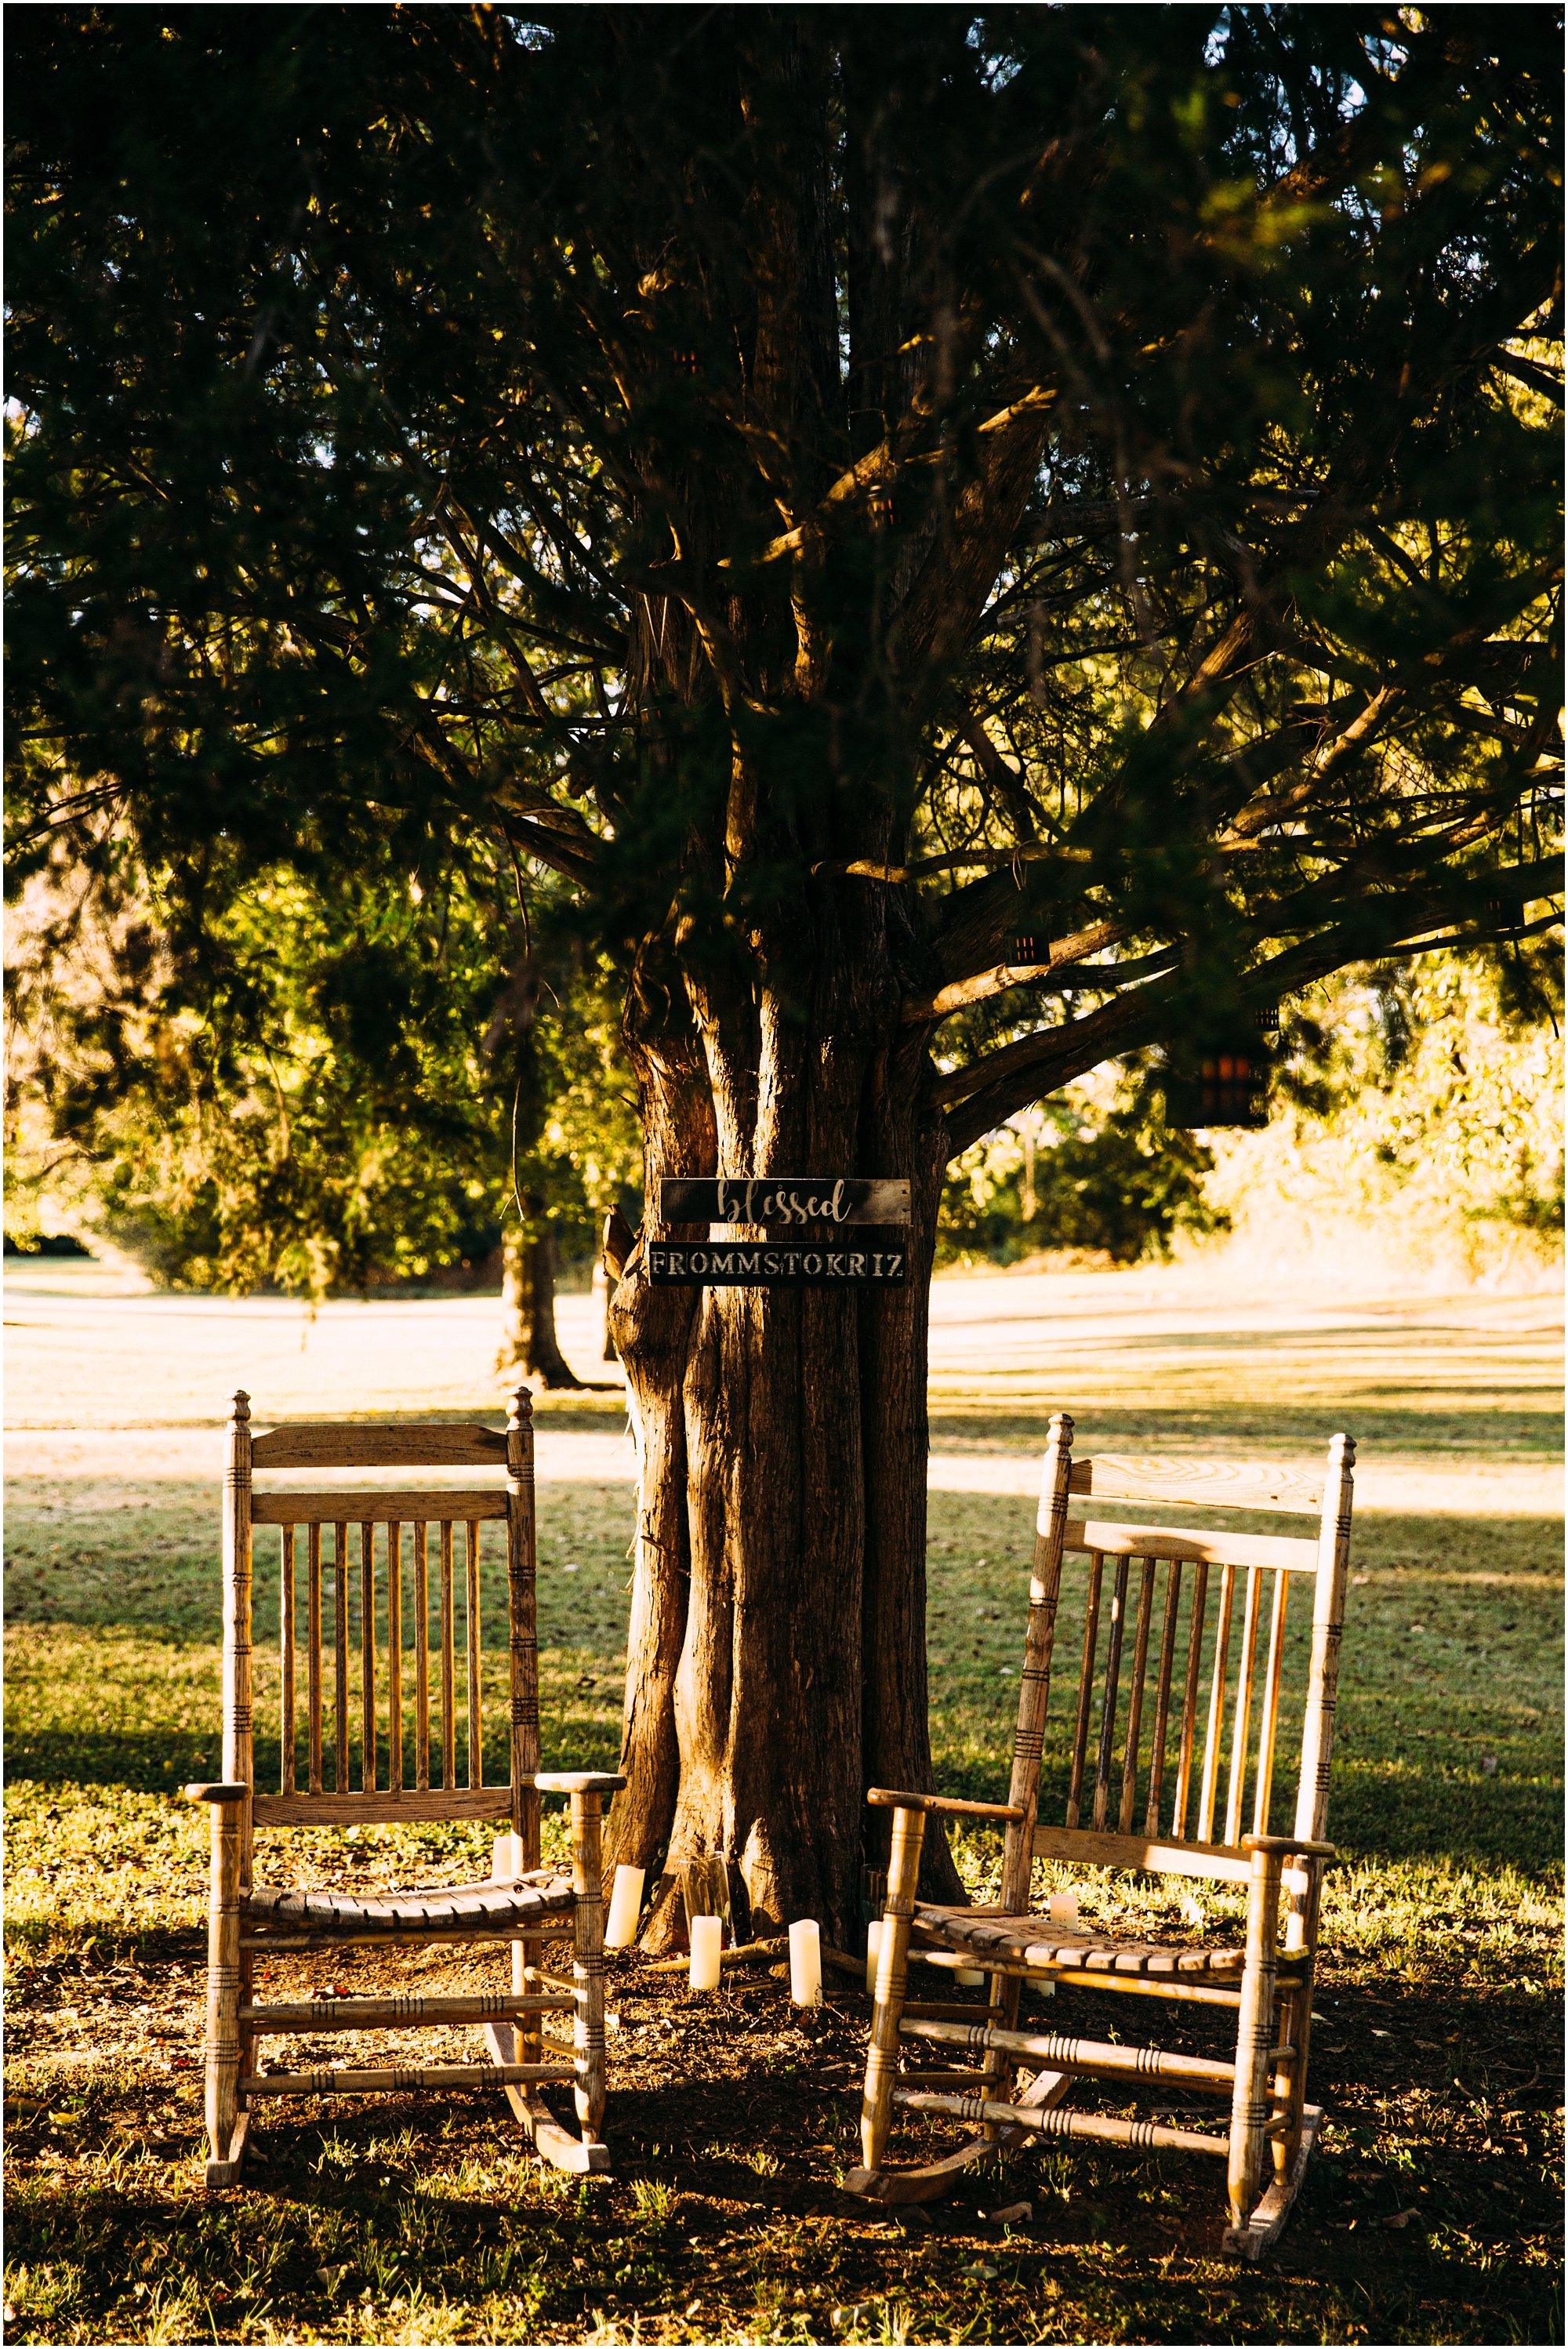 Backyard rocking chairs and tree at wedding location